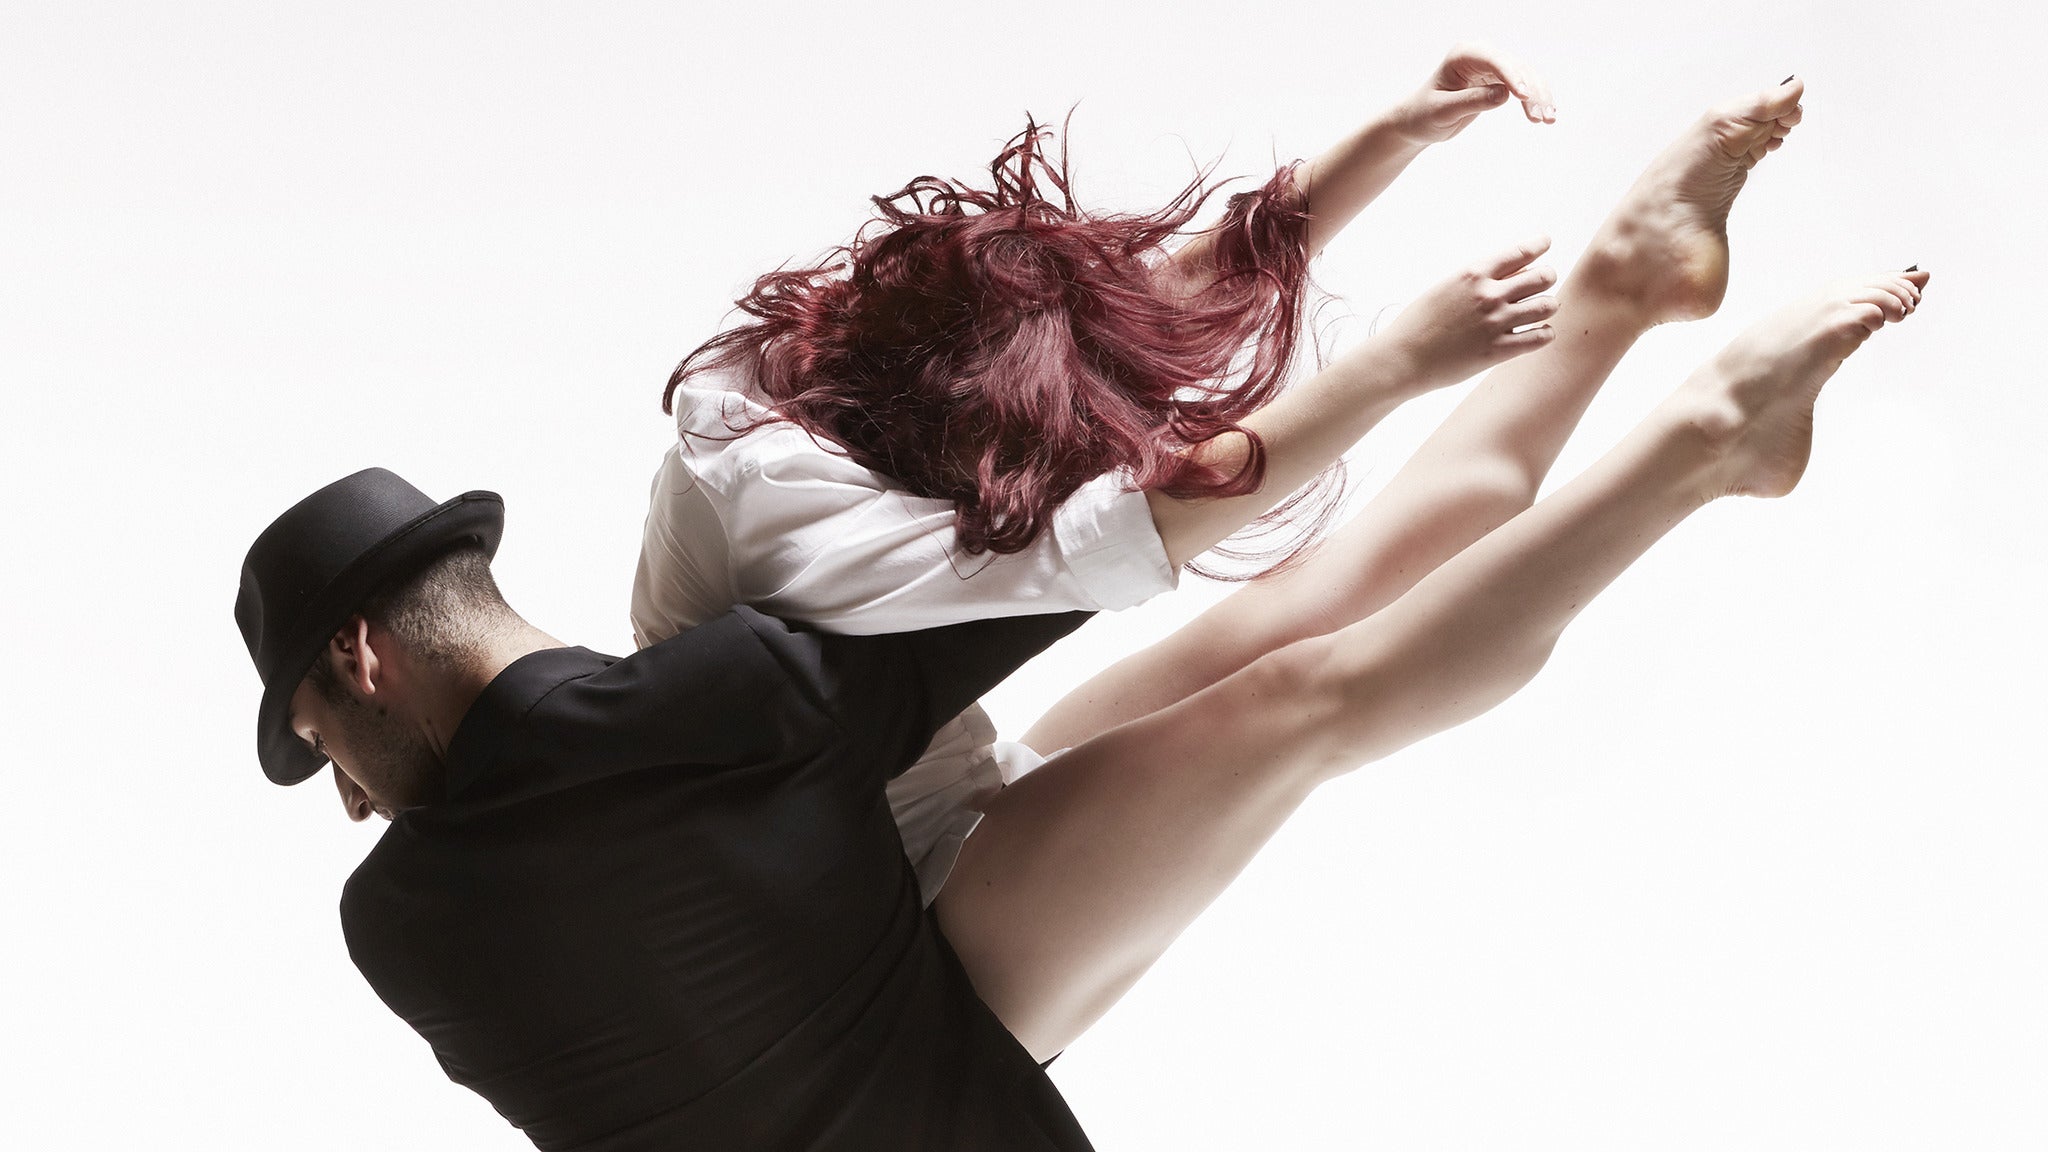 Les Ballets Jazz de Montreal: Dance Me in Toronto promo photo for Ticketmaster presale offer code